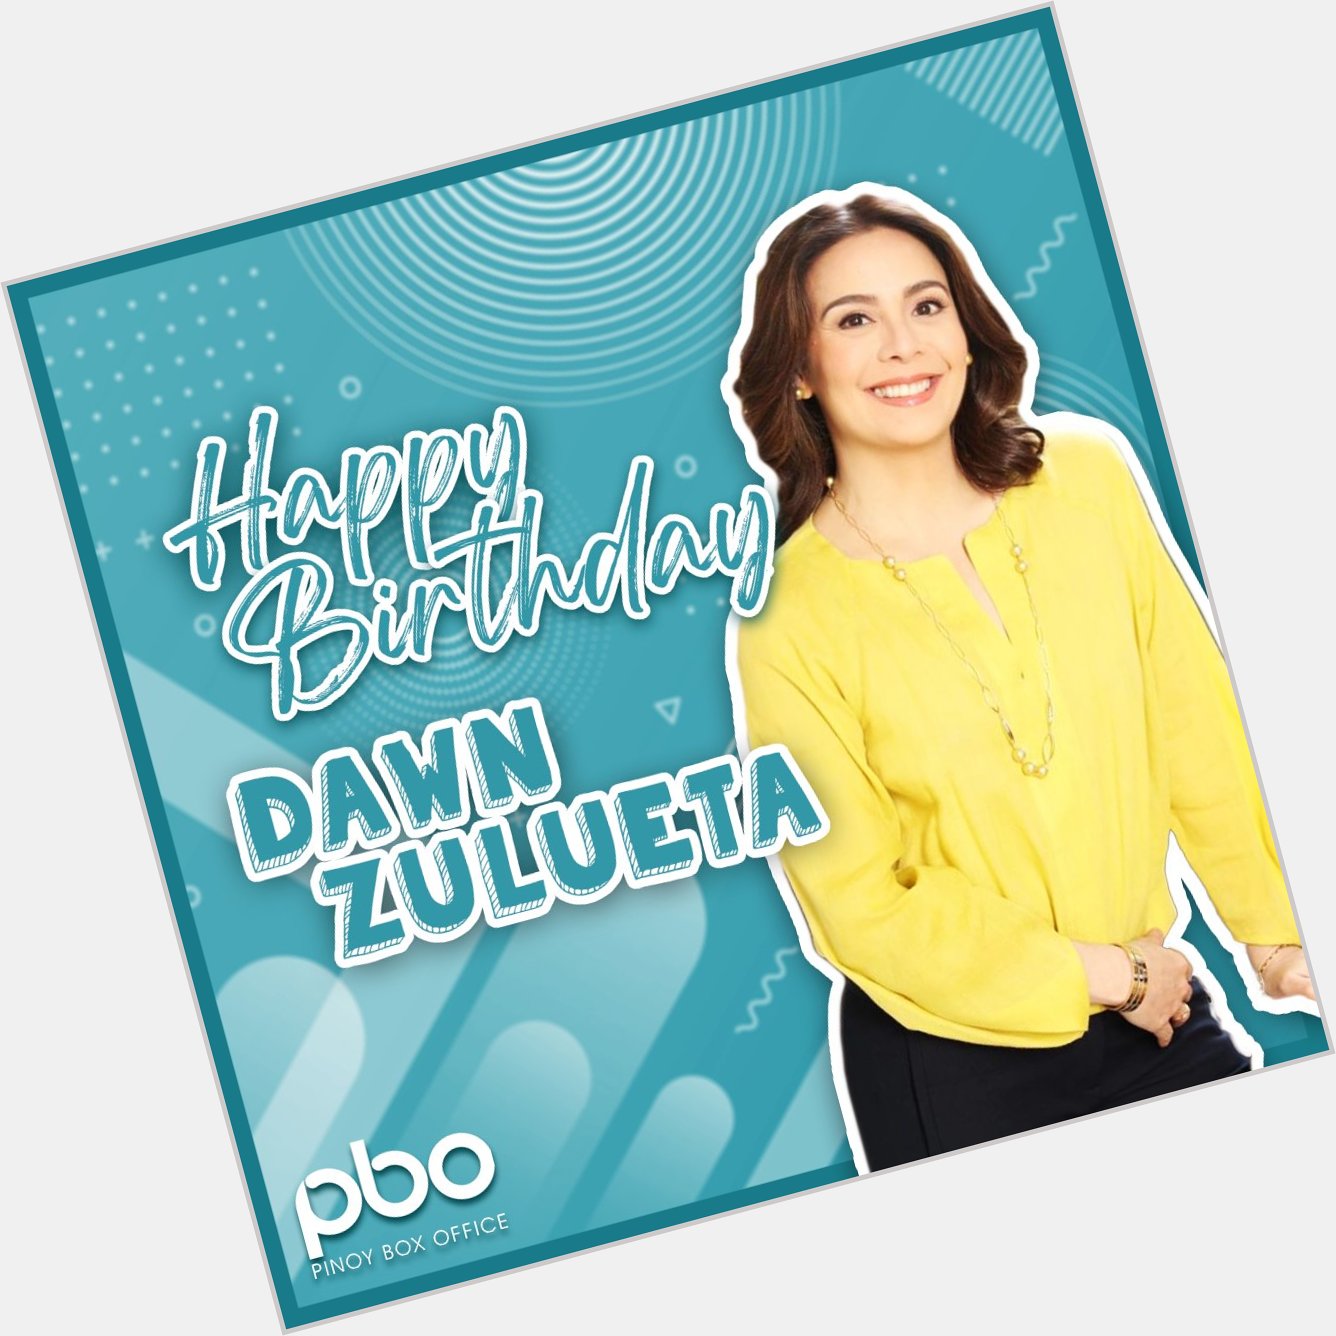 Happy Birthday, Ms. Dawn Zulueta! Wishing you a wonderful day filled with happiness! 